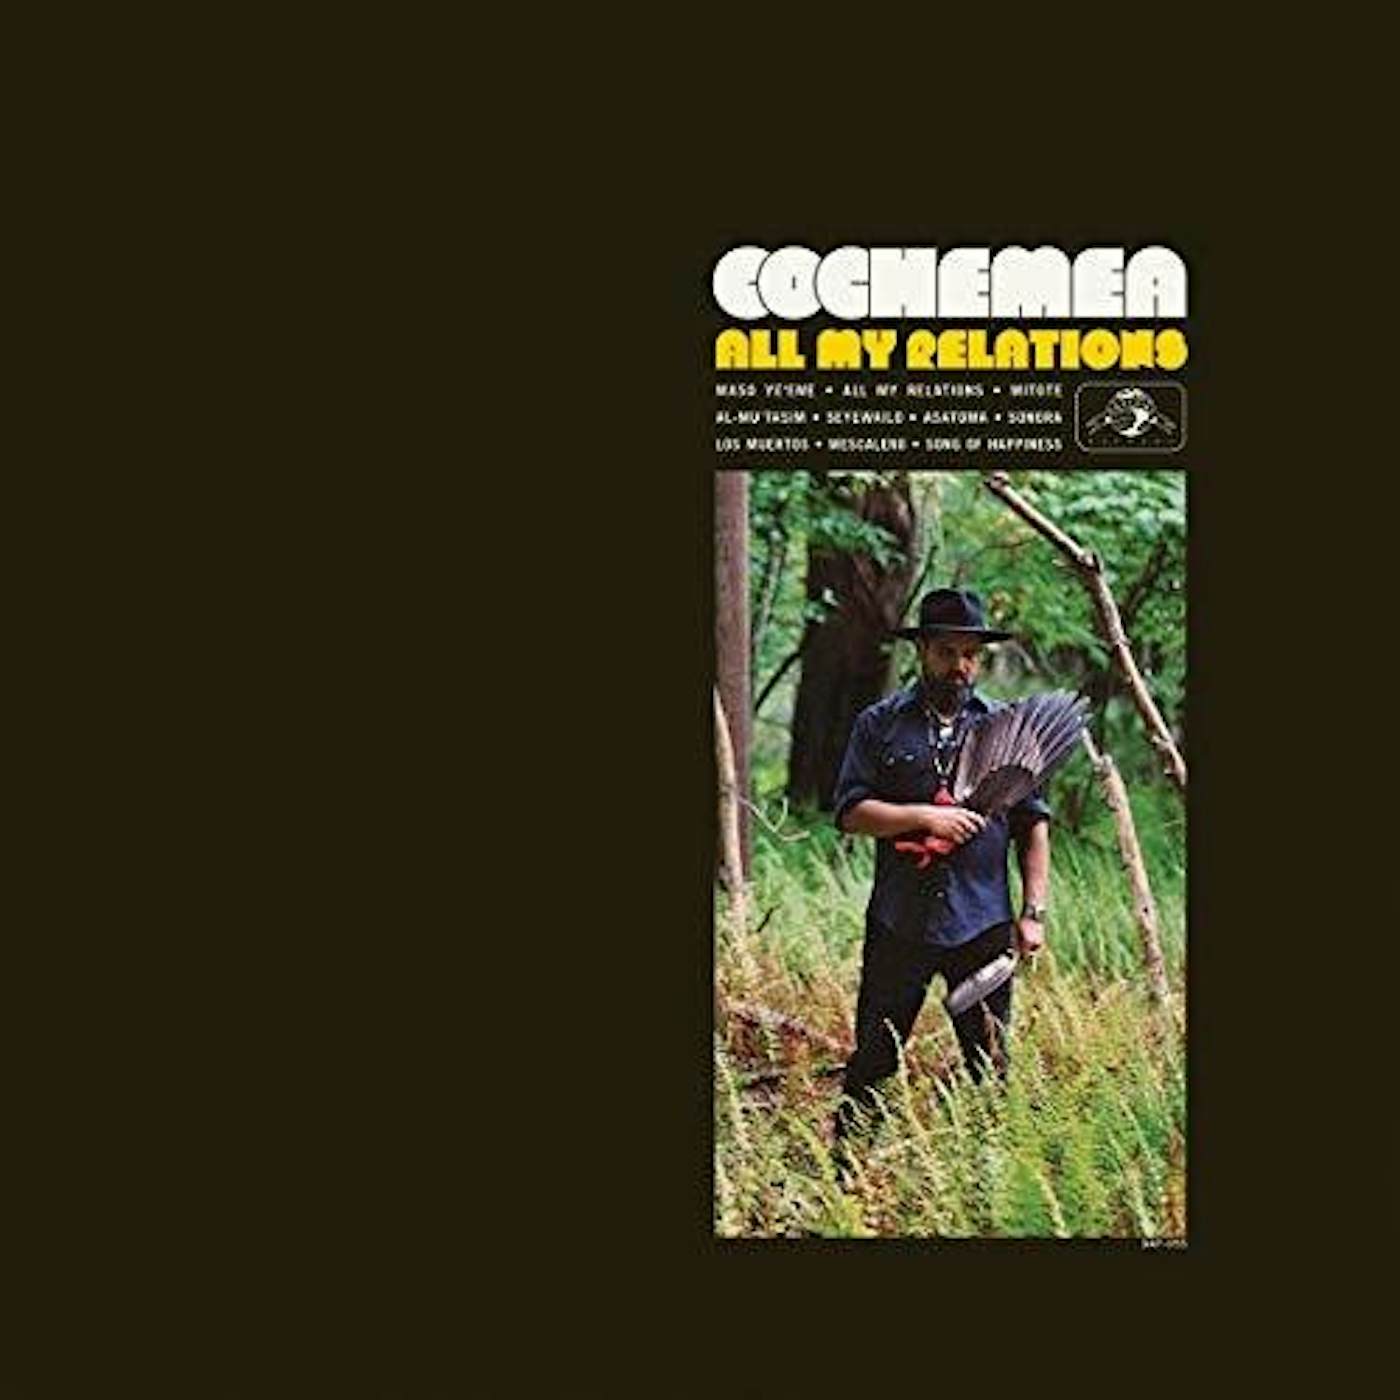 Cochemea All My Relations (DL) Vinyl Record